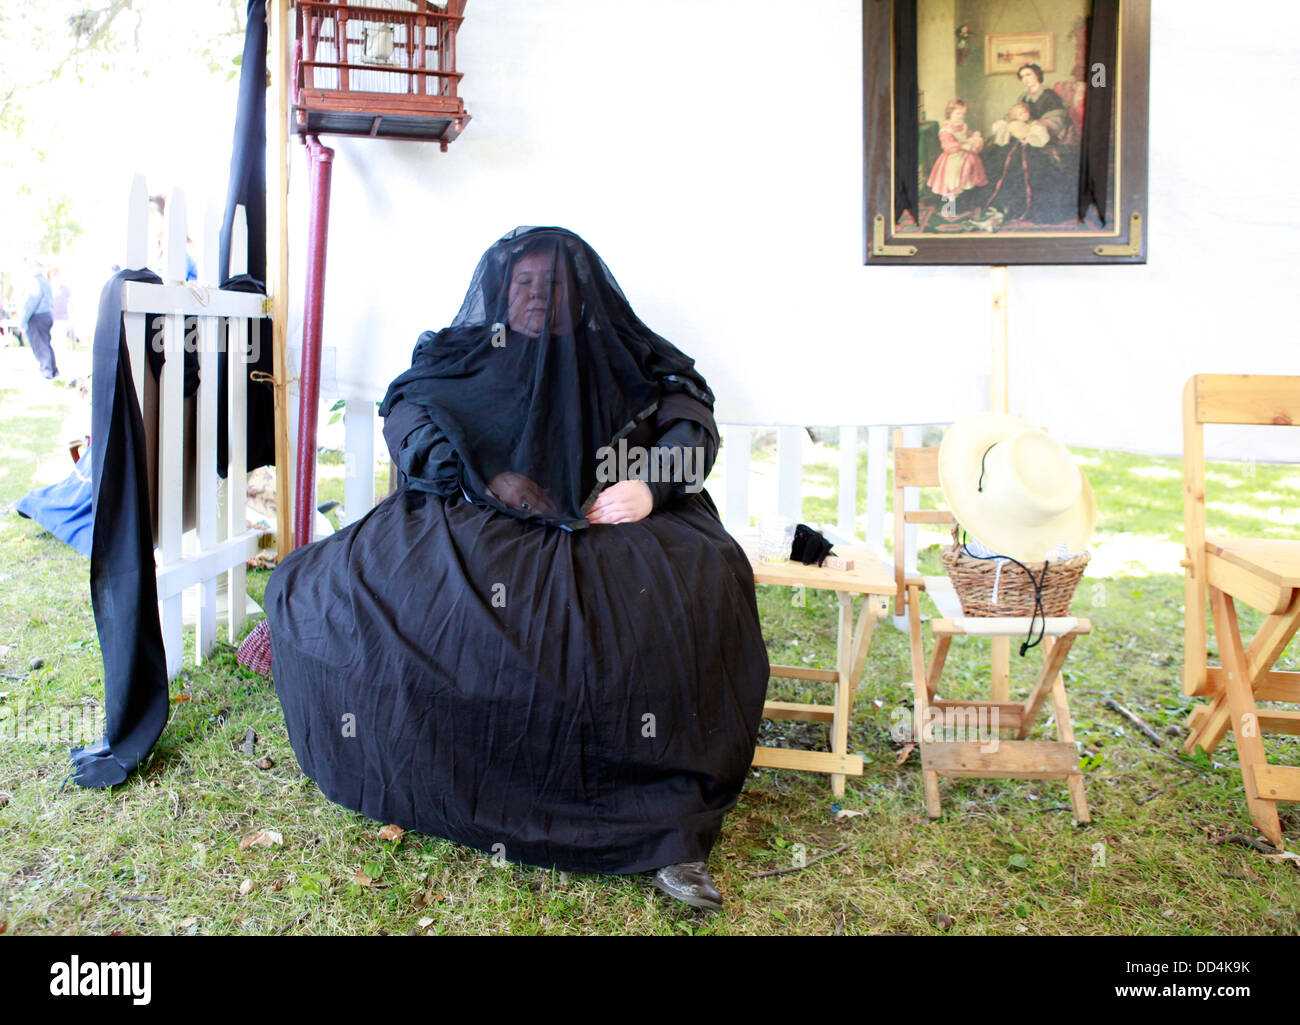 A civil war enthusiast is dresses as a widow during a civil war reenactment. Stock Photo